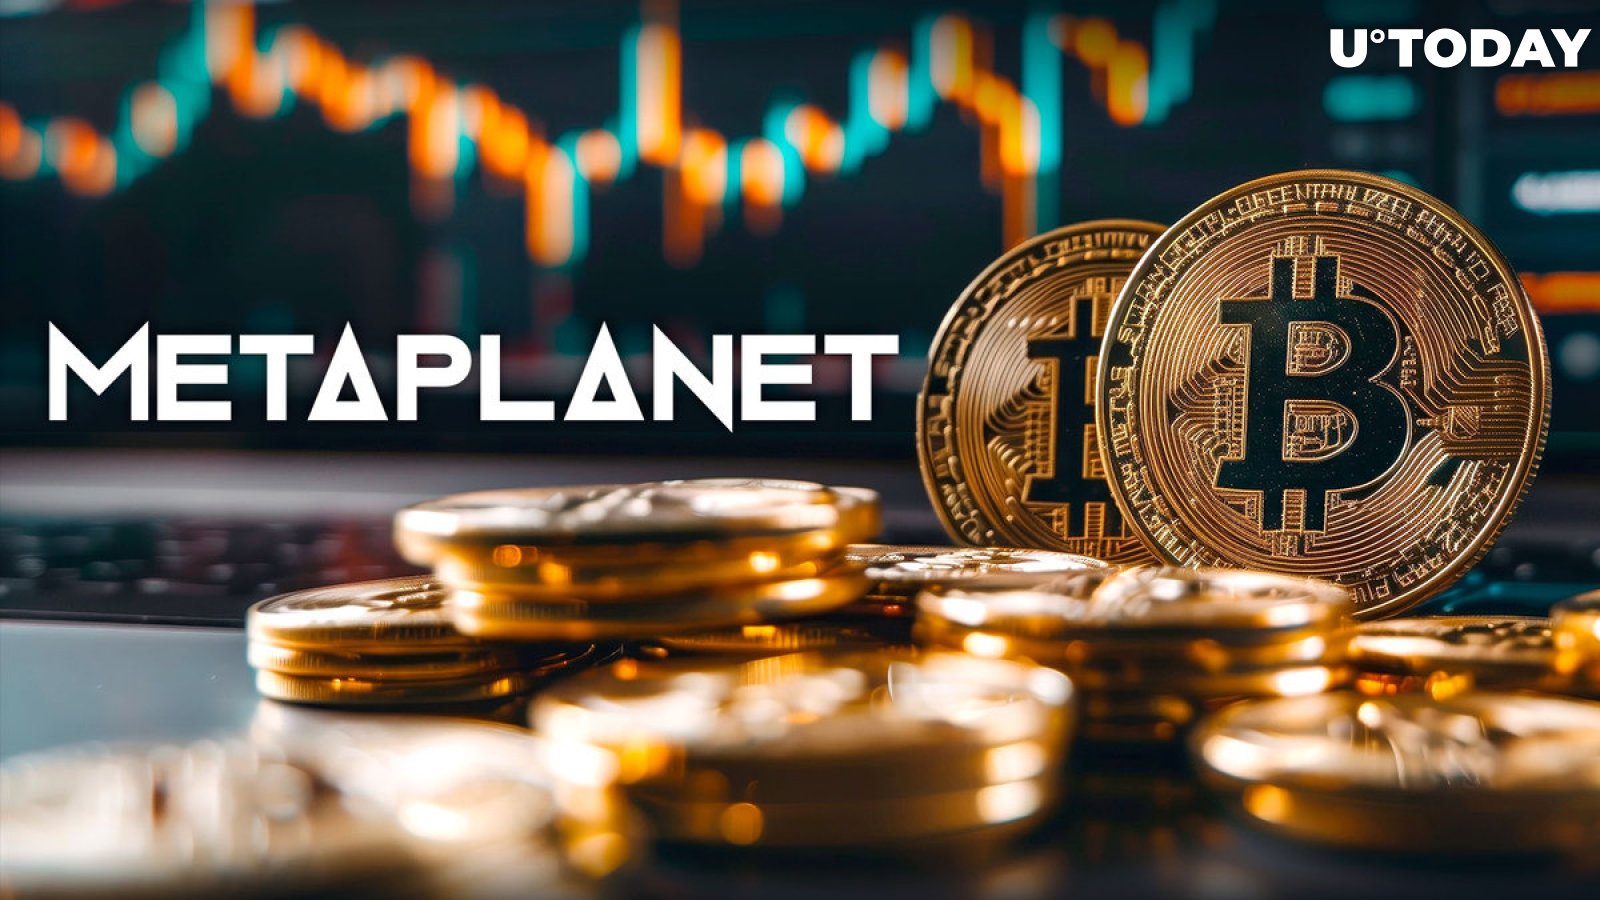 Metaplanet Makes Move to Buy More Bitcoin (BTC)